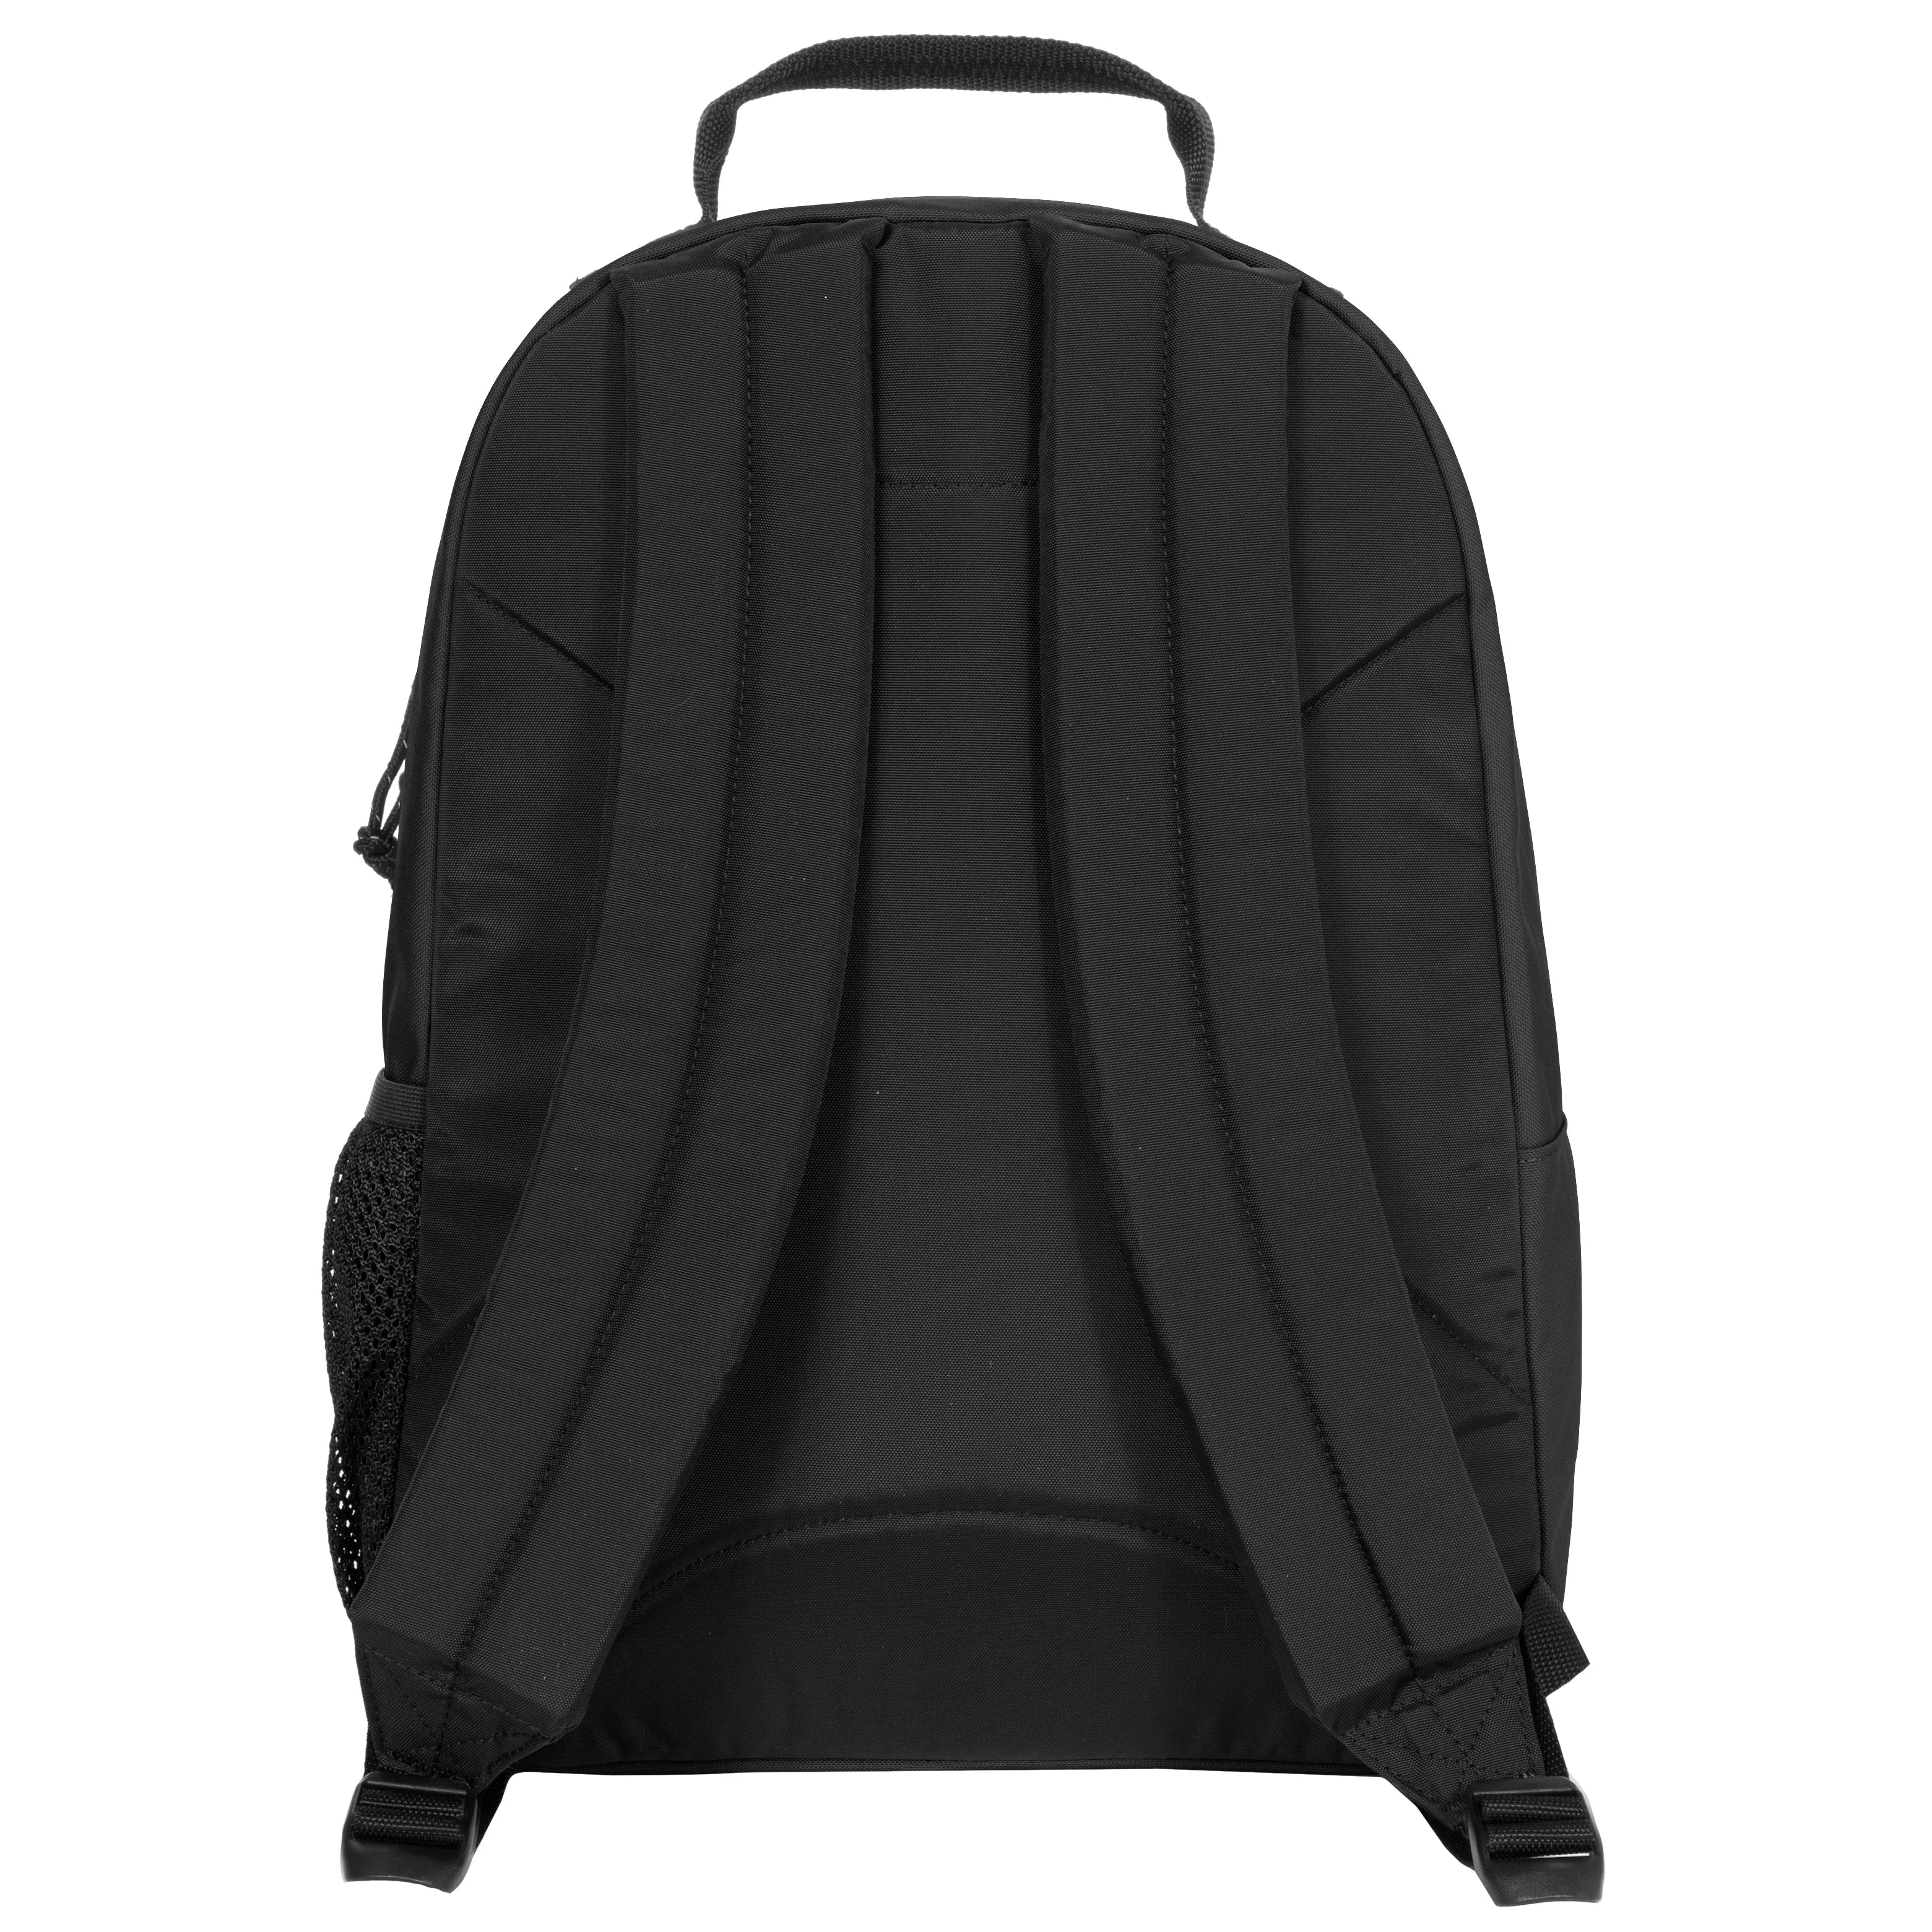 Eastpak Authentic Morius Laptop Backpack 43 cm - Black Denim